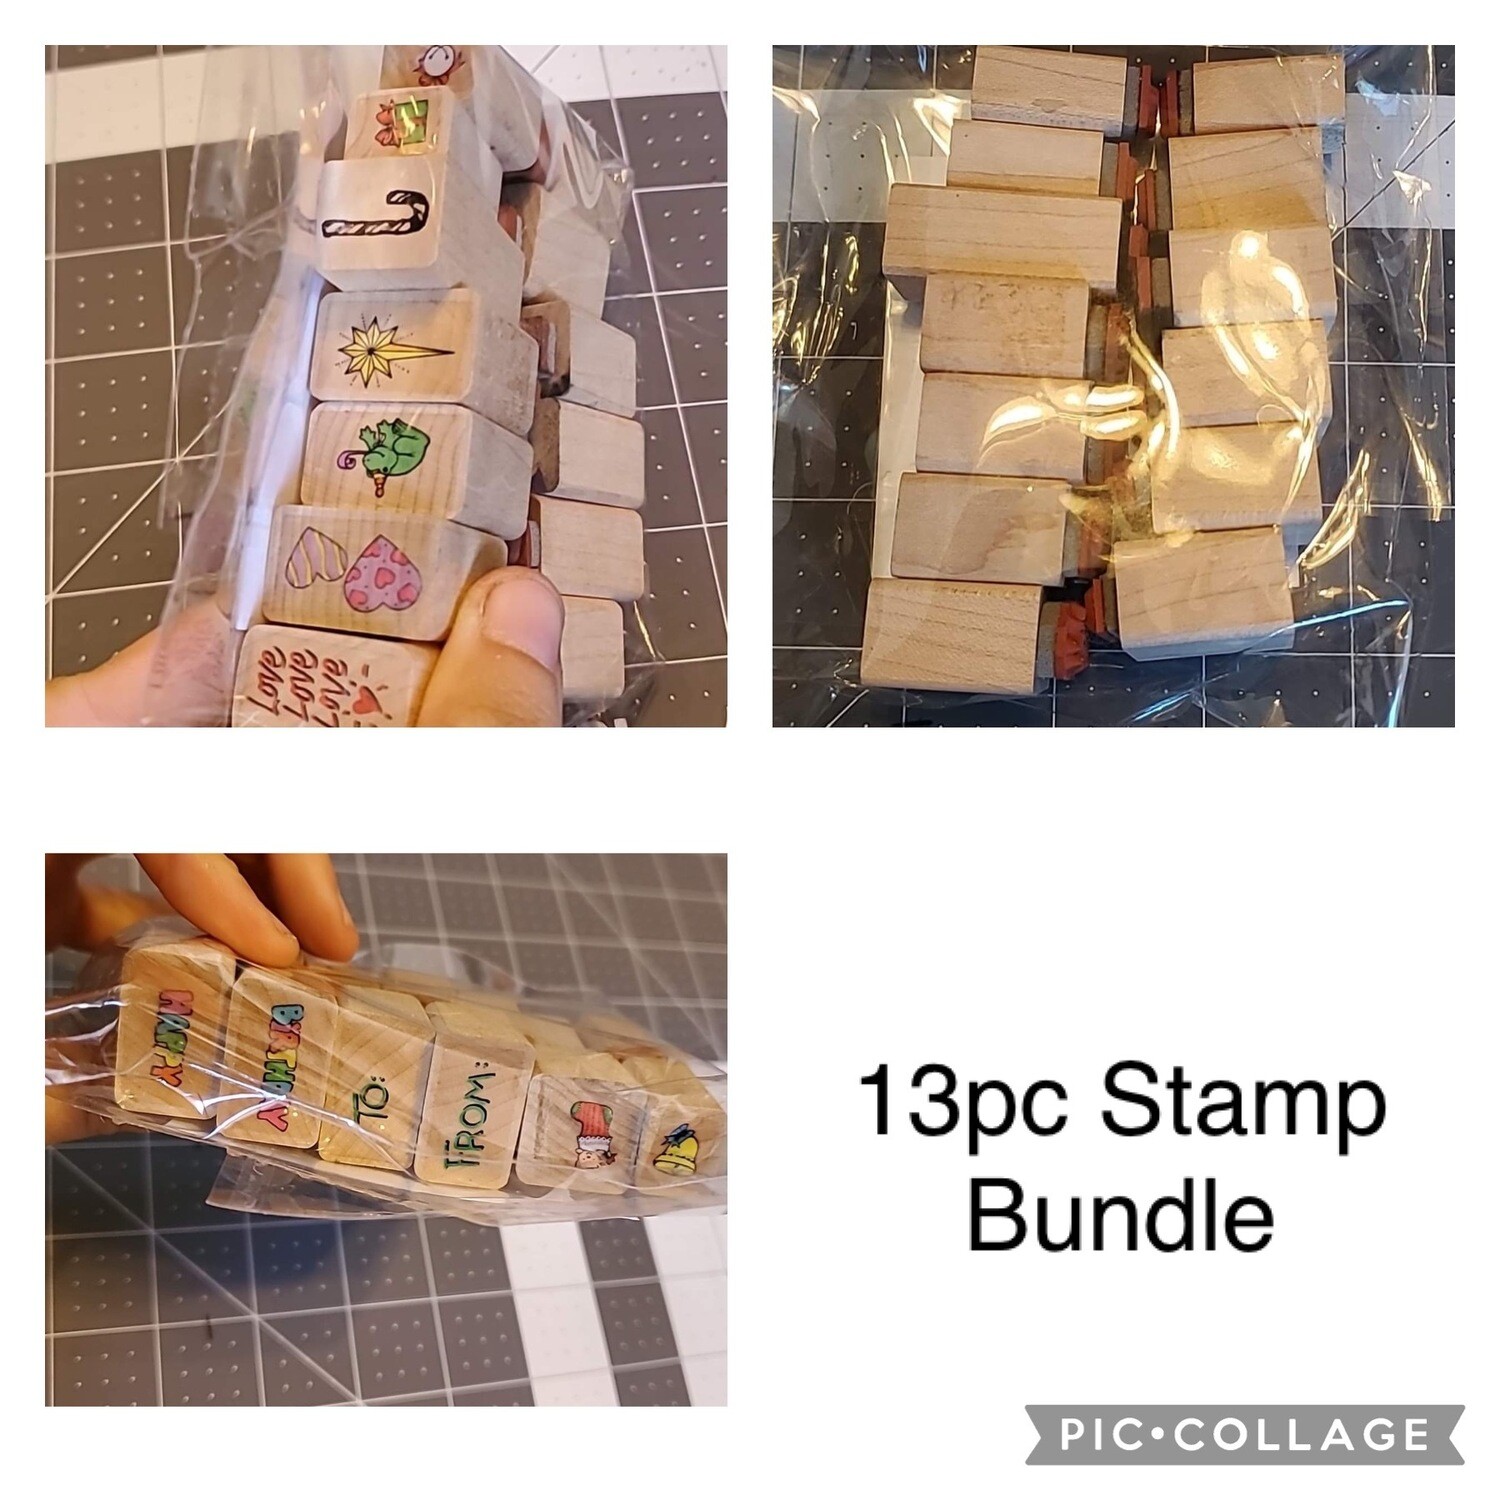 13pc Stamp Bundle